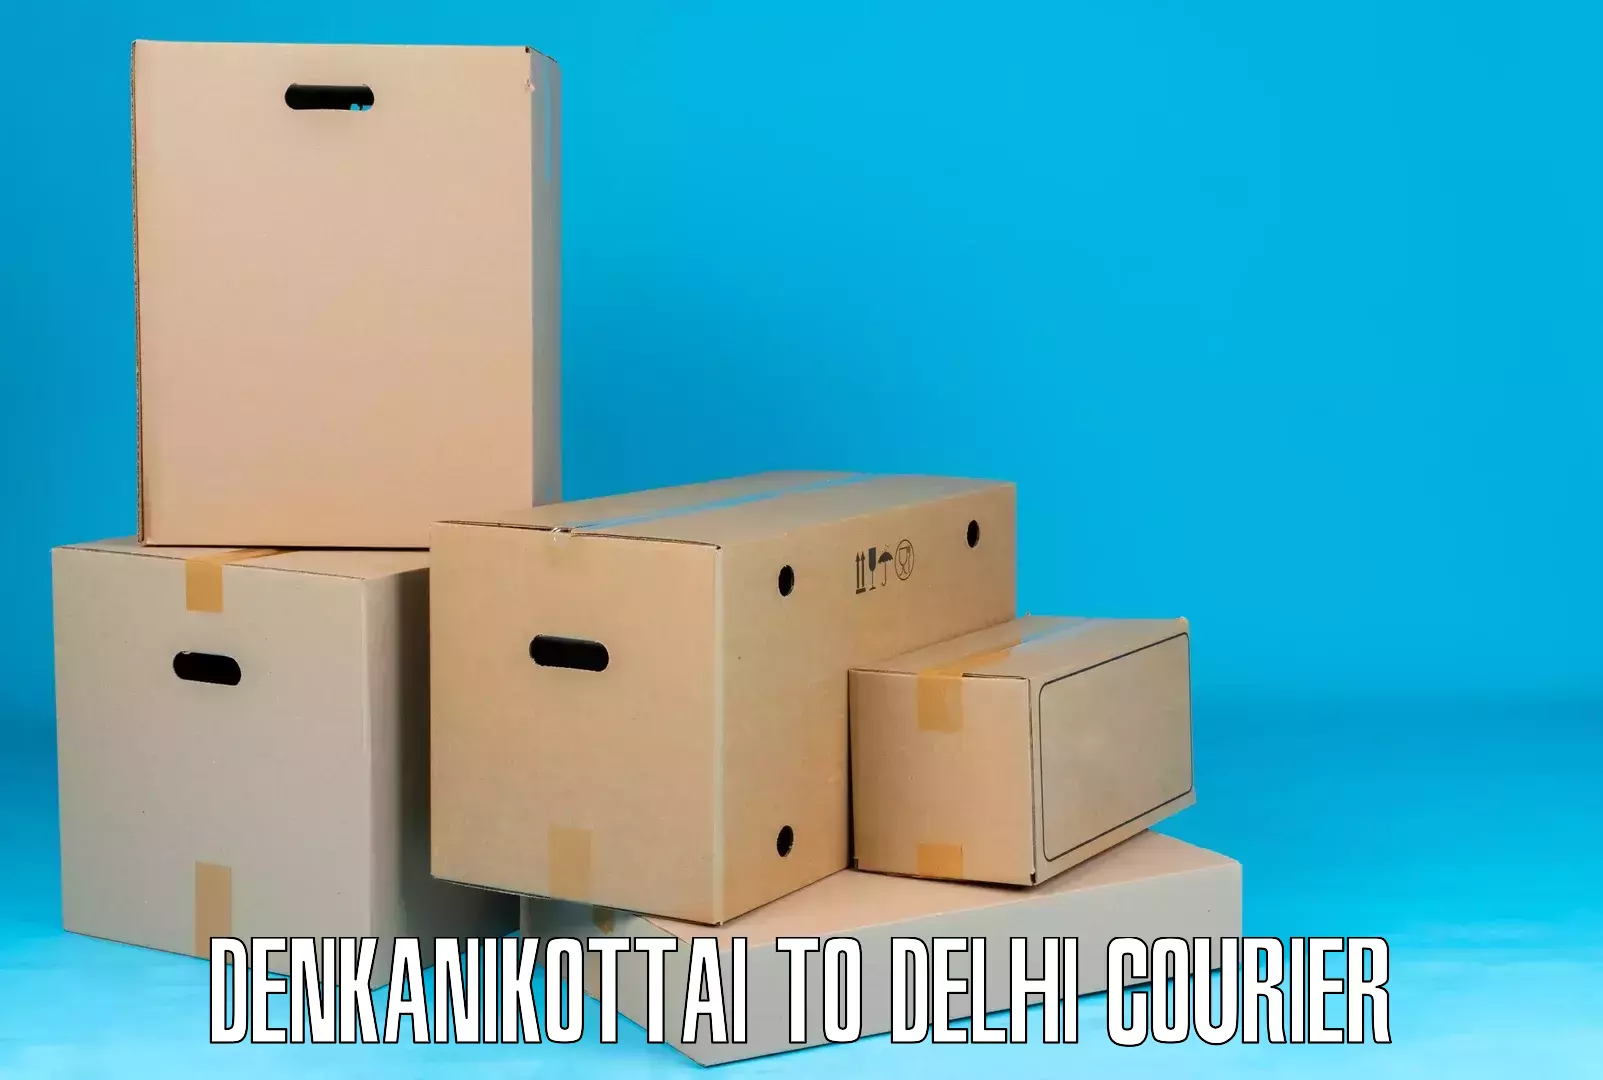 Easy return solutions Denkanikottai to Delhi